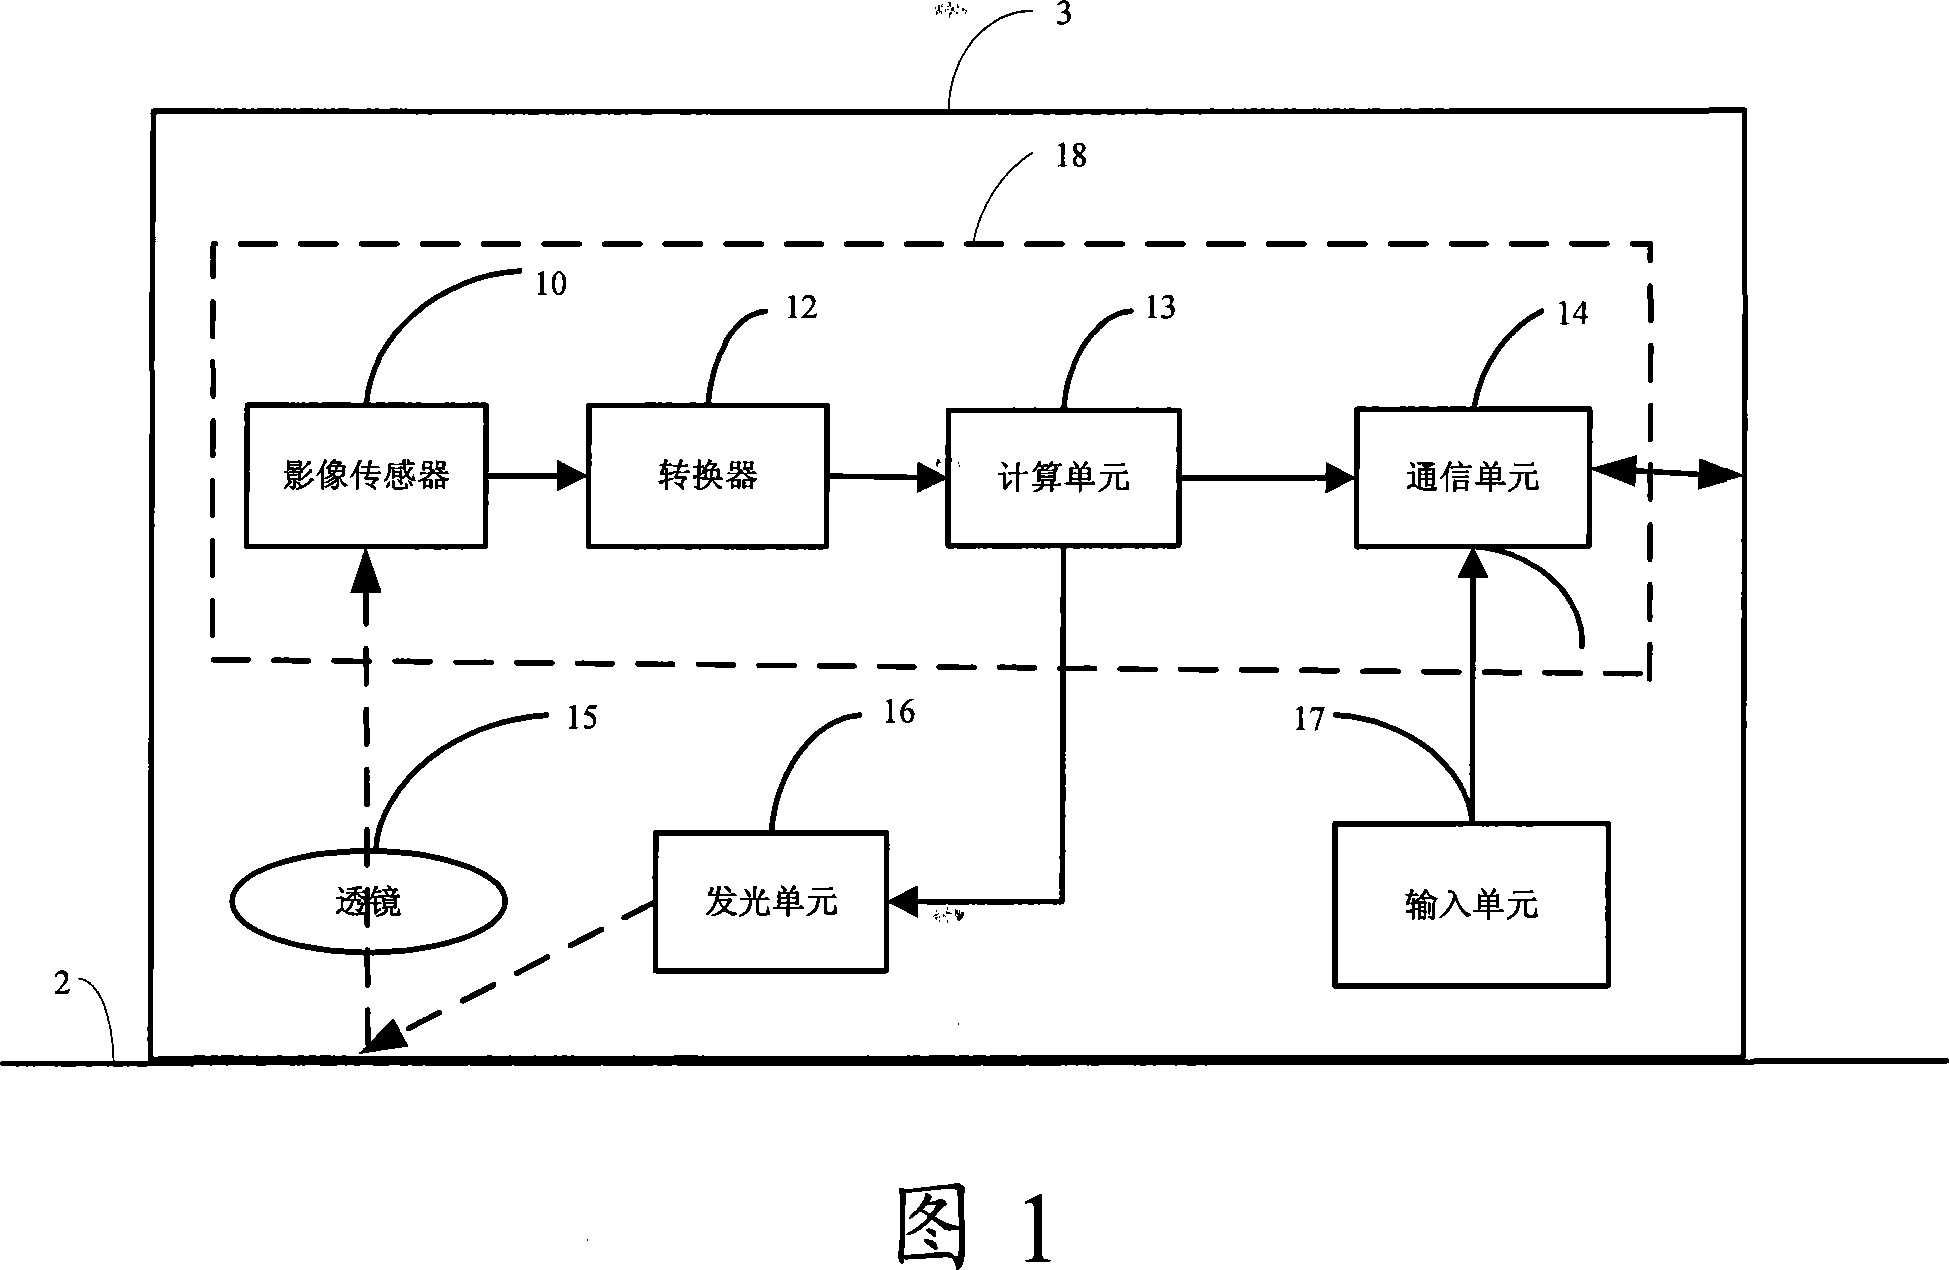 Optical indicating equipment electricity-saving method